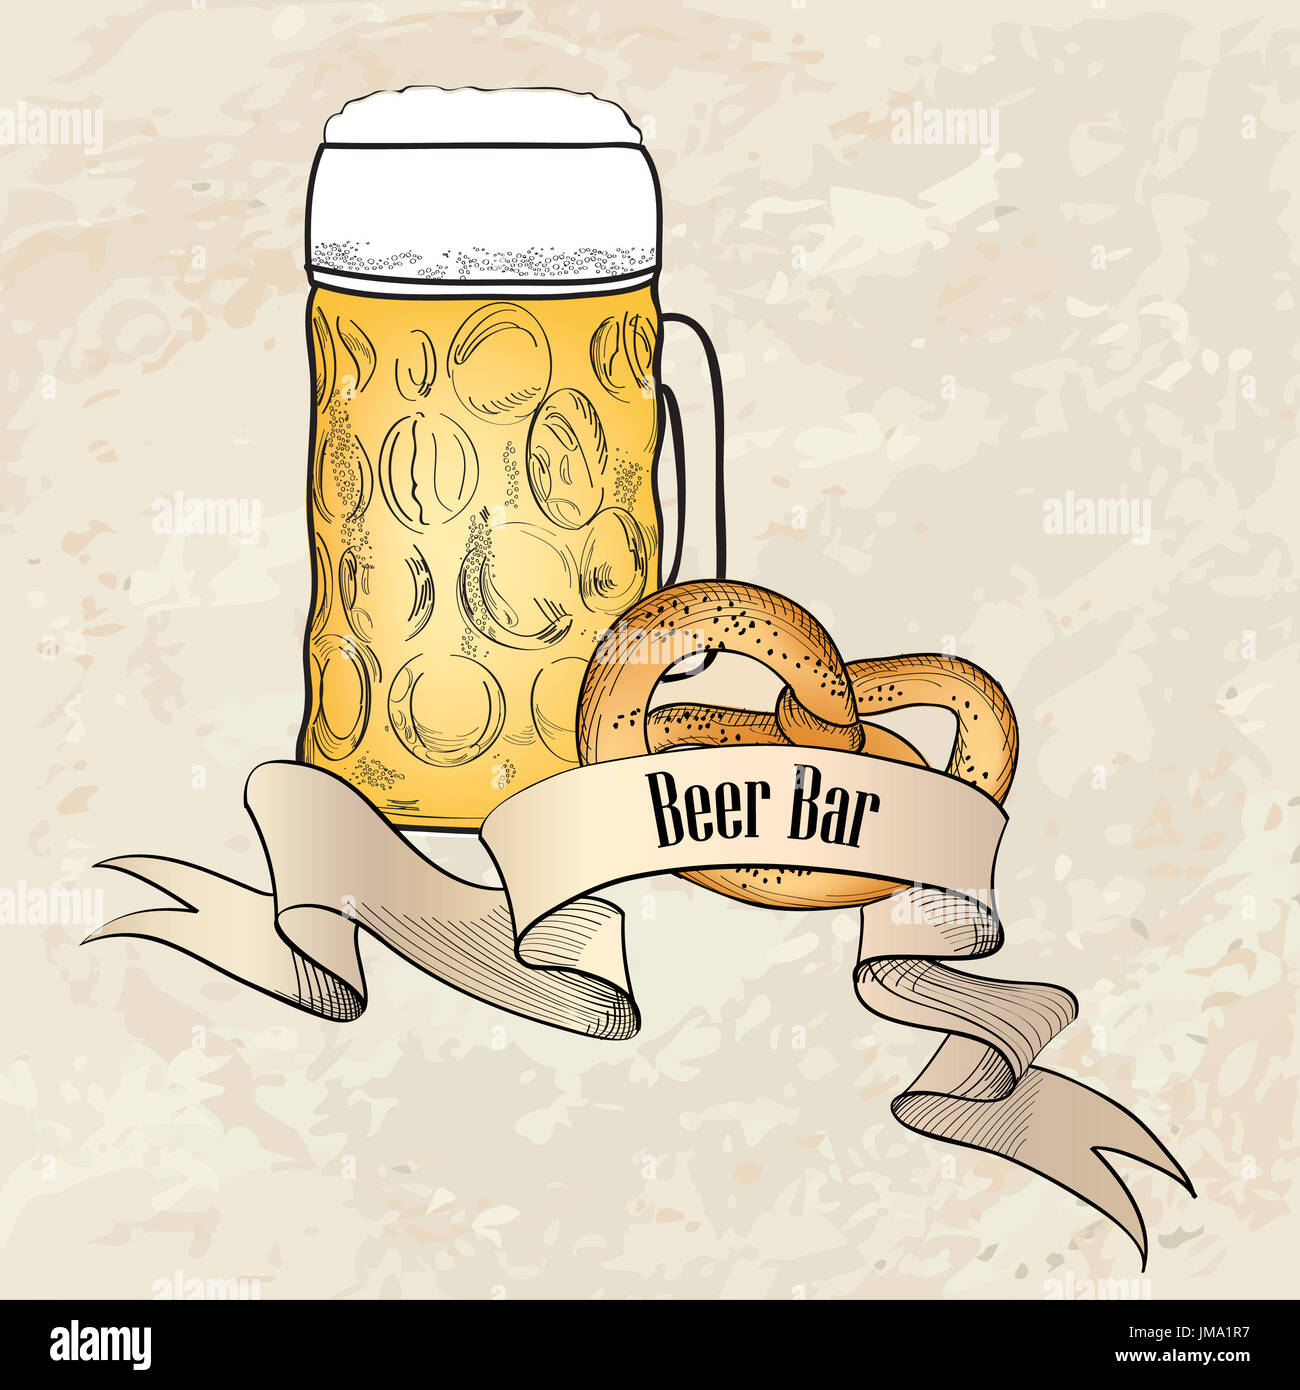 https://c8.alamy.com/comp/JMA1R7/beer-ware-background-in-retro-style-beer-mug-banner-beer-glass-doodle-JMA1R7.jpg